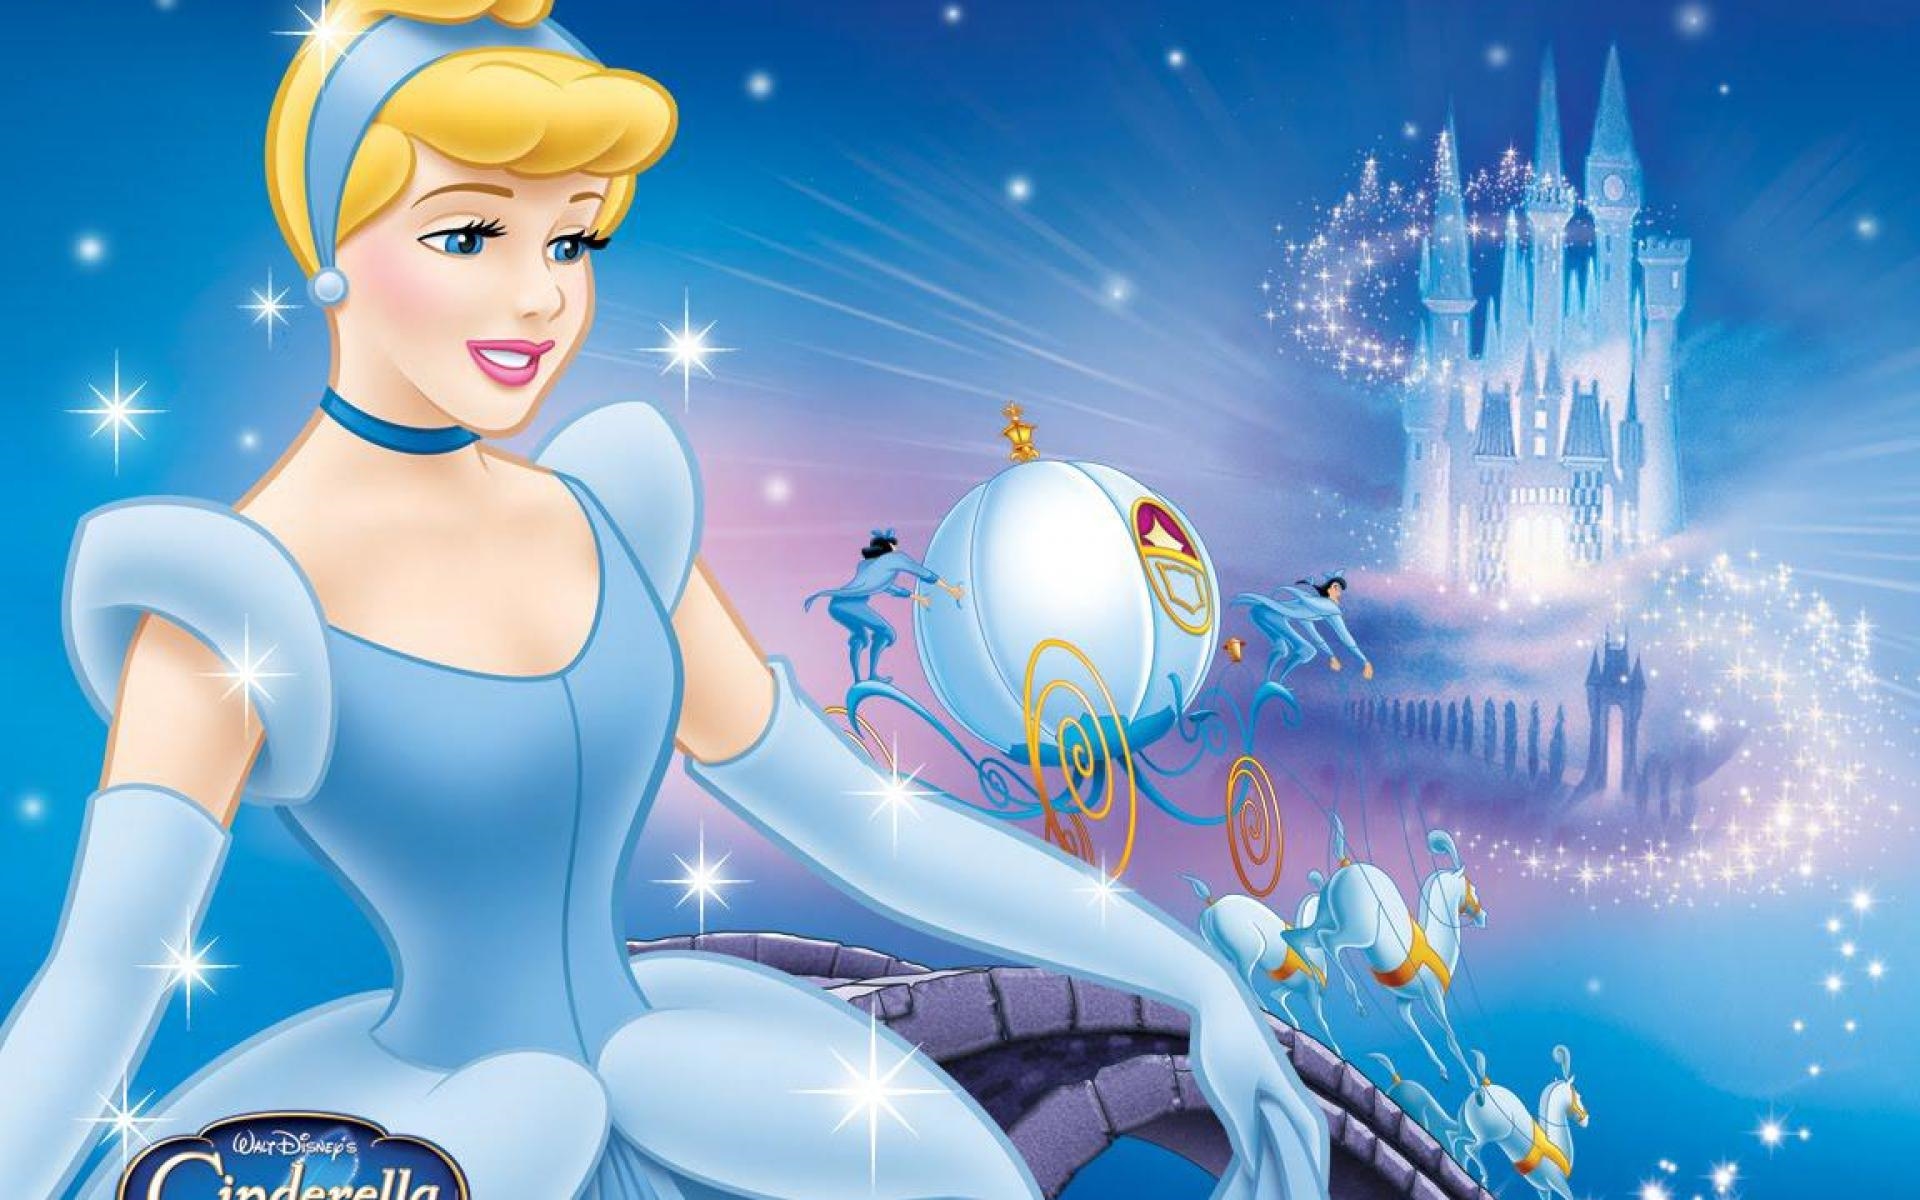 Cinderella Disney Princess Wallpapers